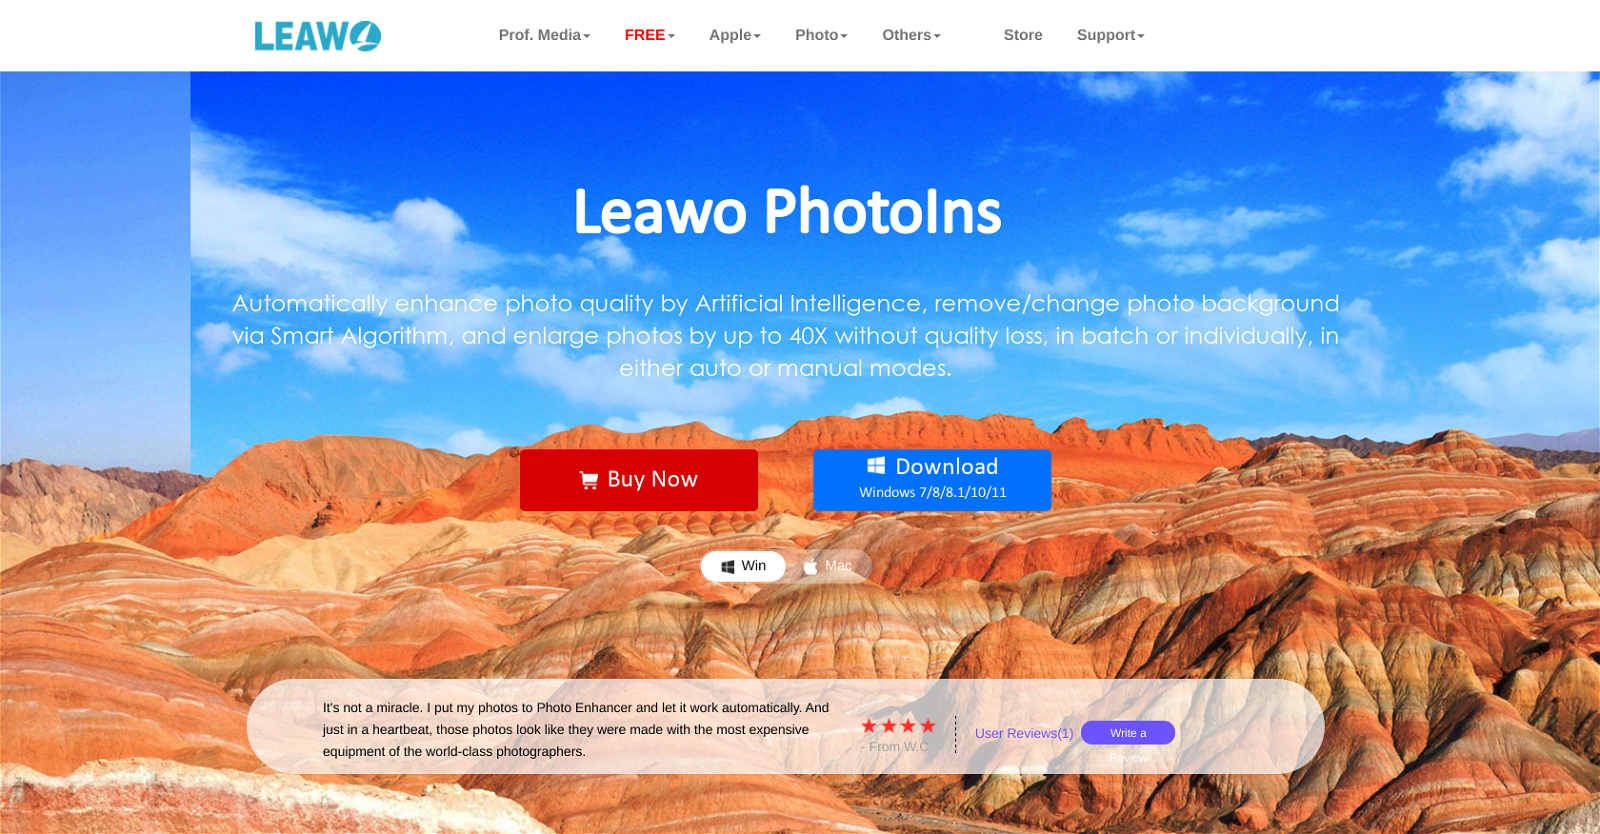 Leawo PhotoIns website